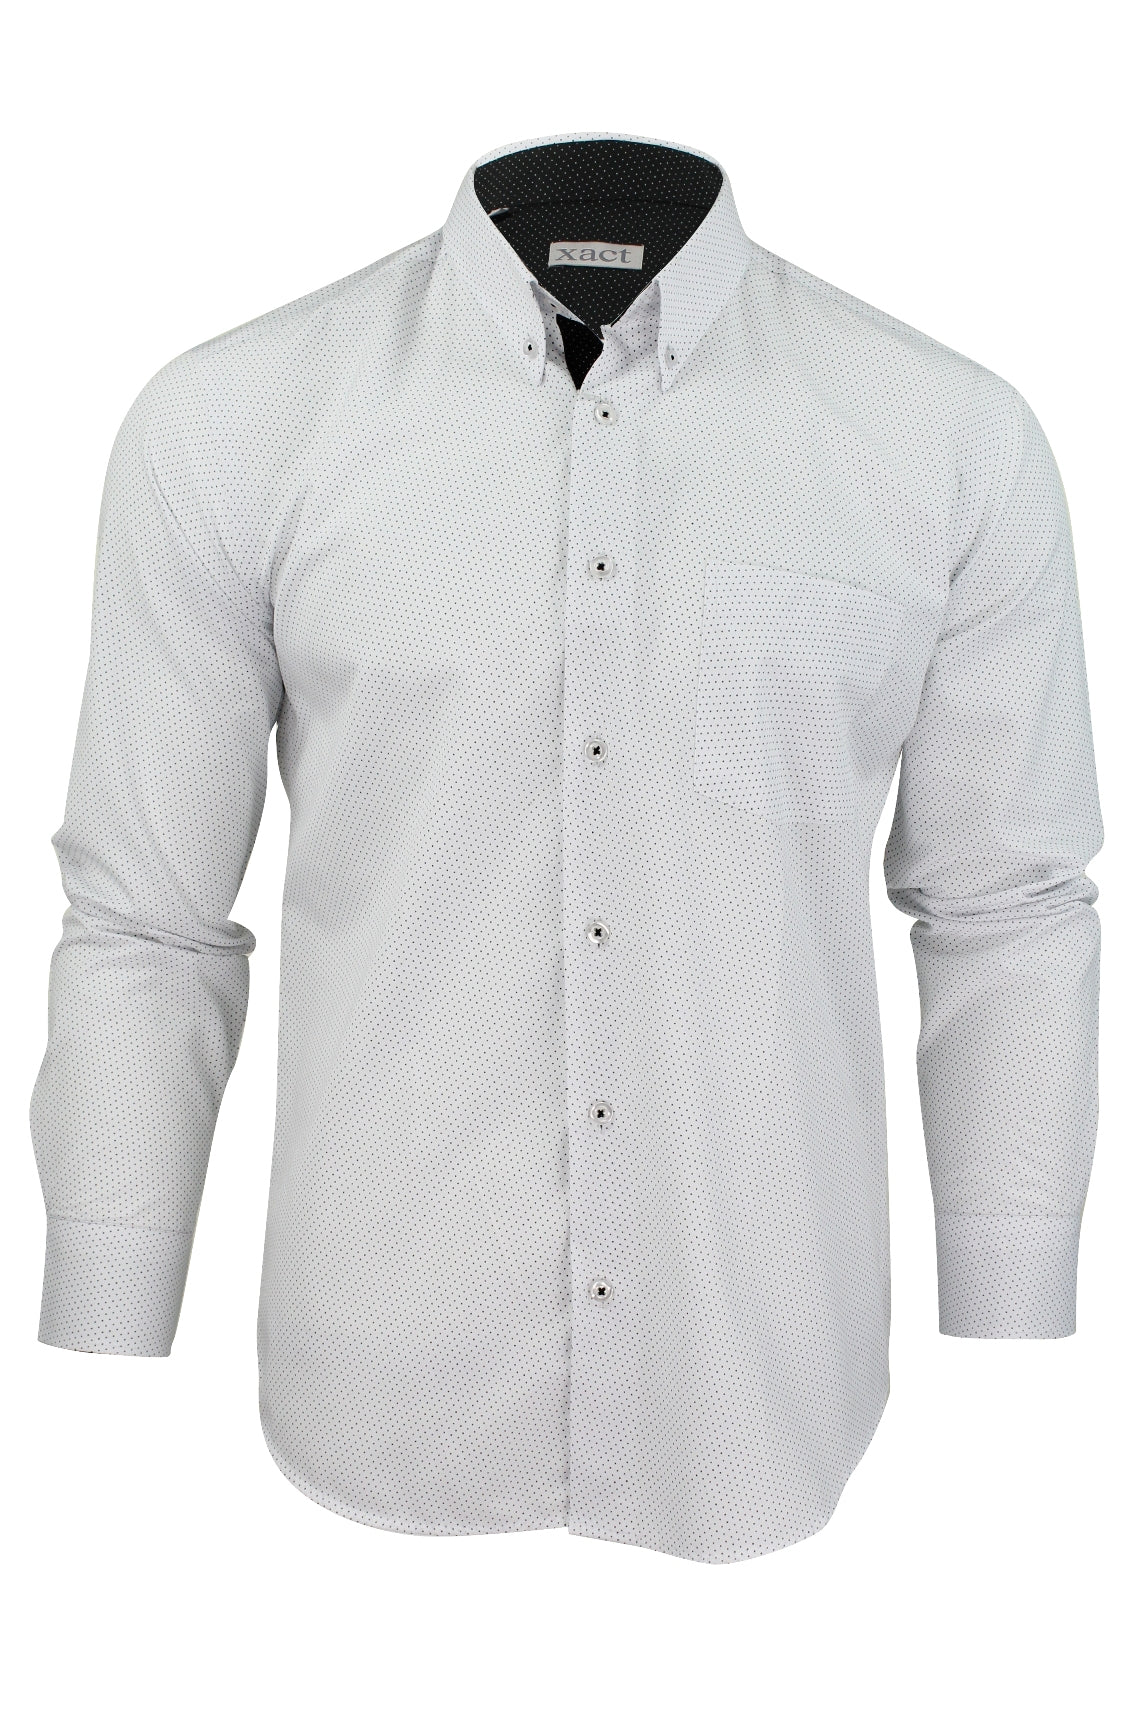 Mens Long Sleeved Shirt by Xact Clothing Mini Polka Dot, 01, 1510121, White